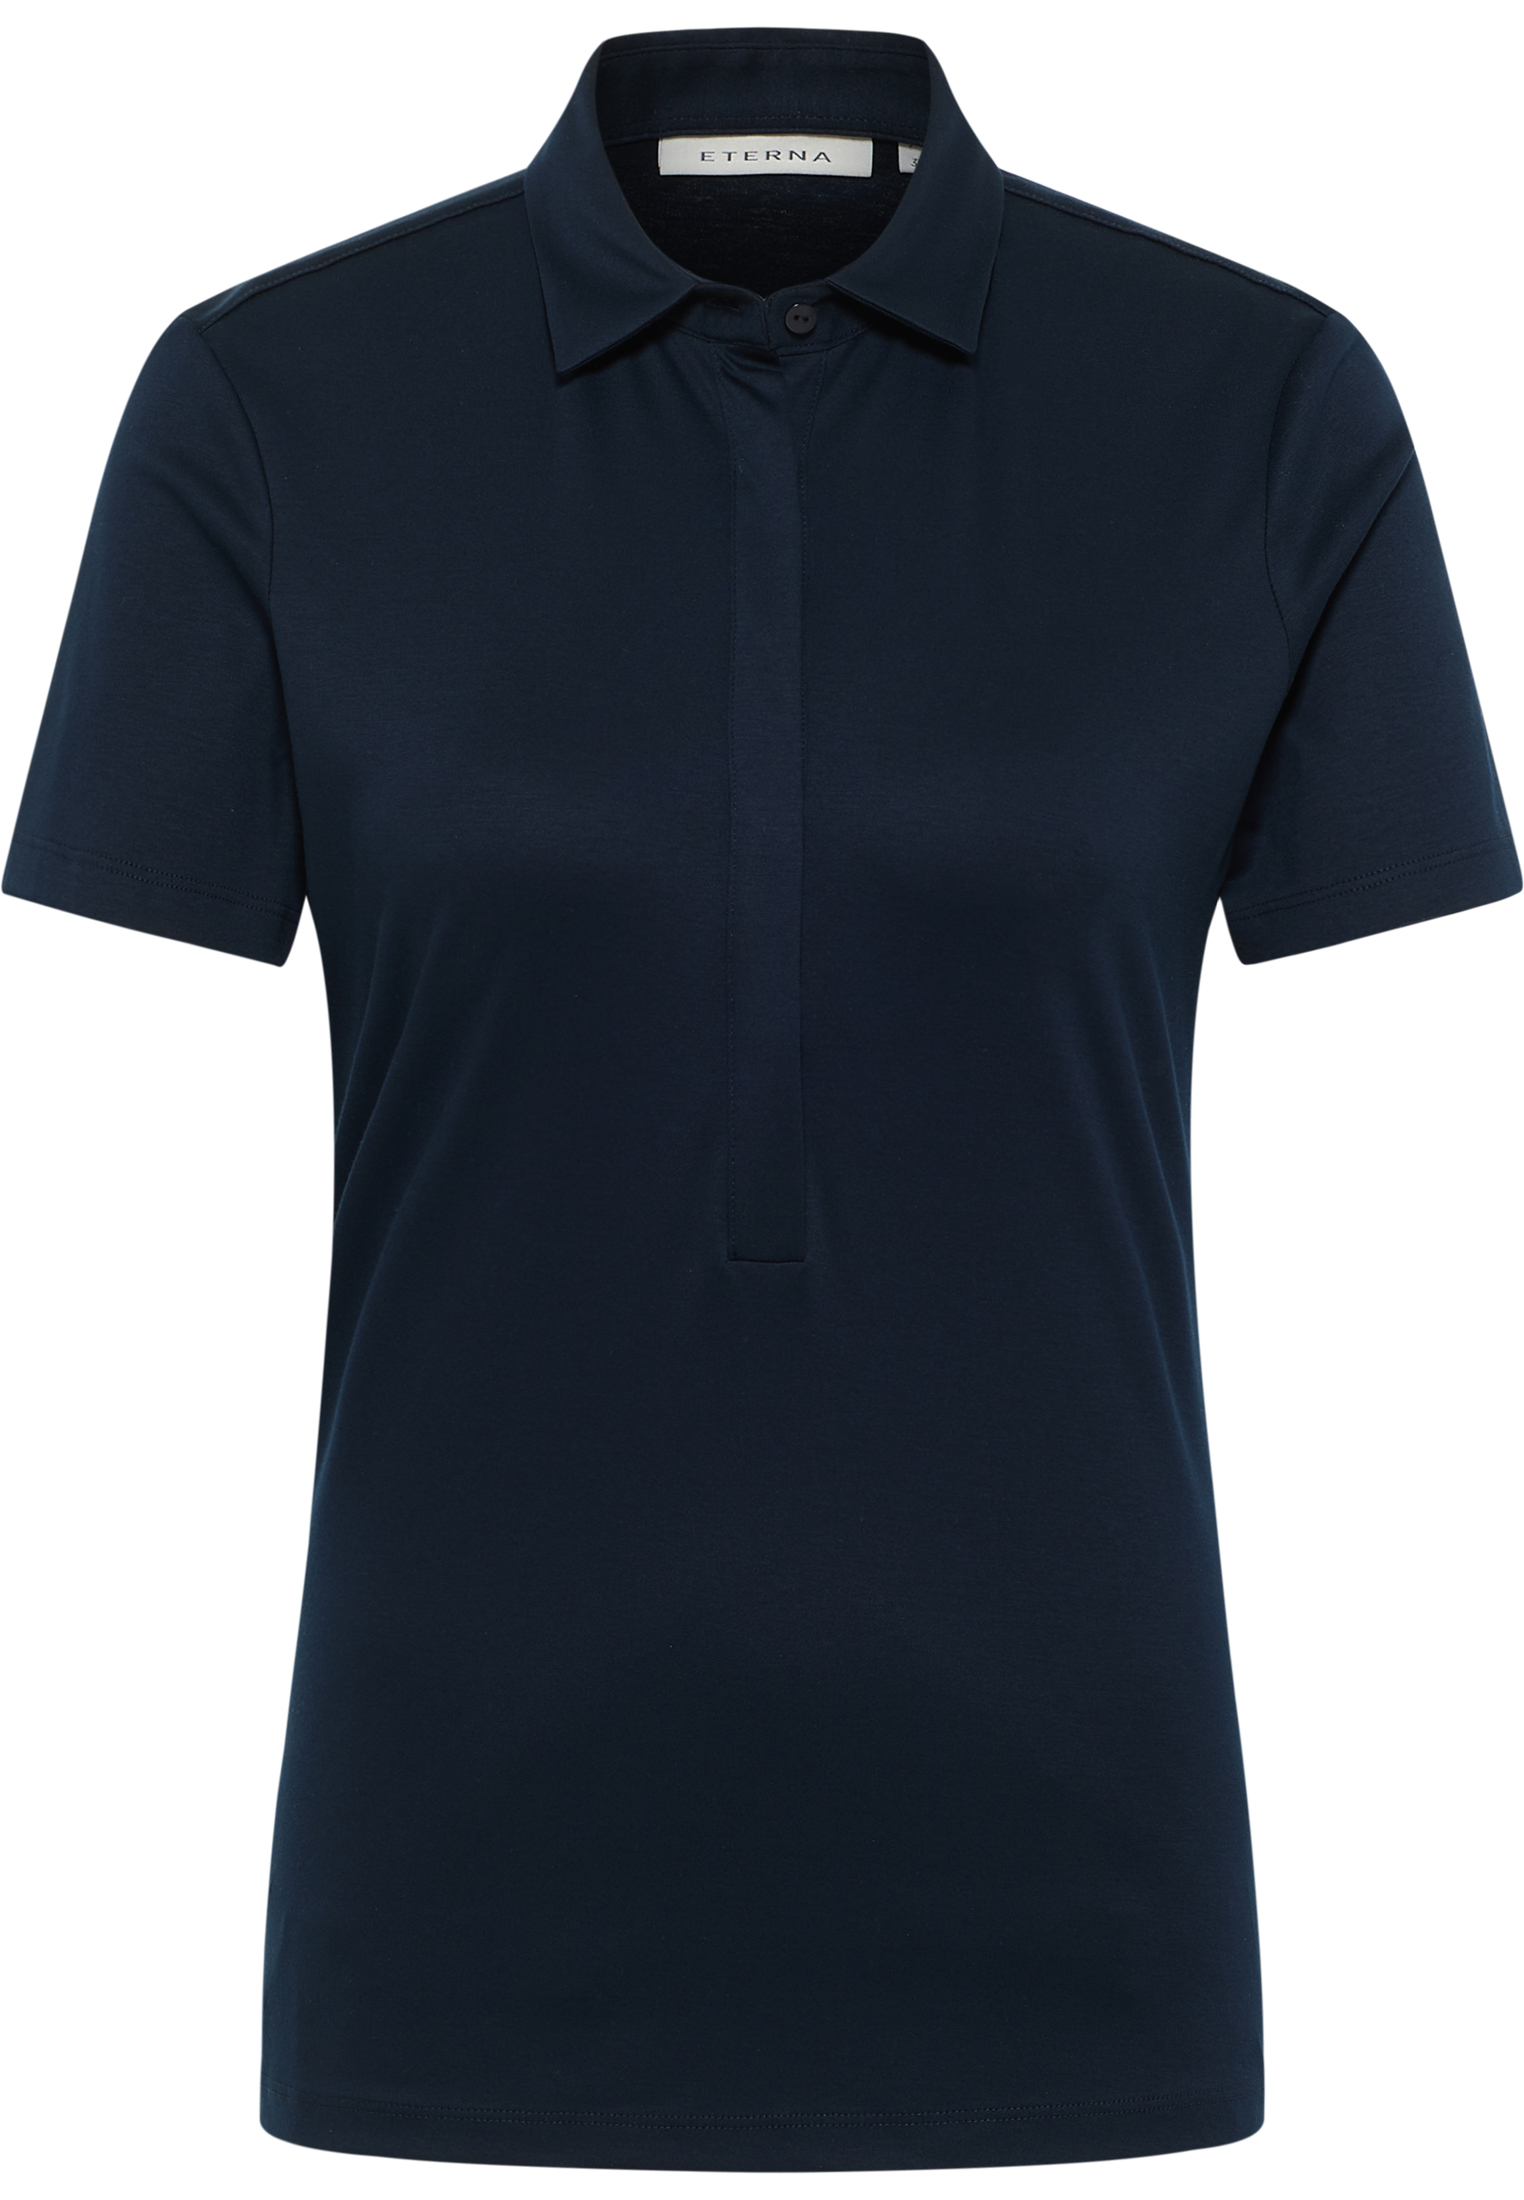 Jersey Shirt Blouse in dark blue plain